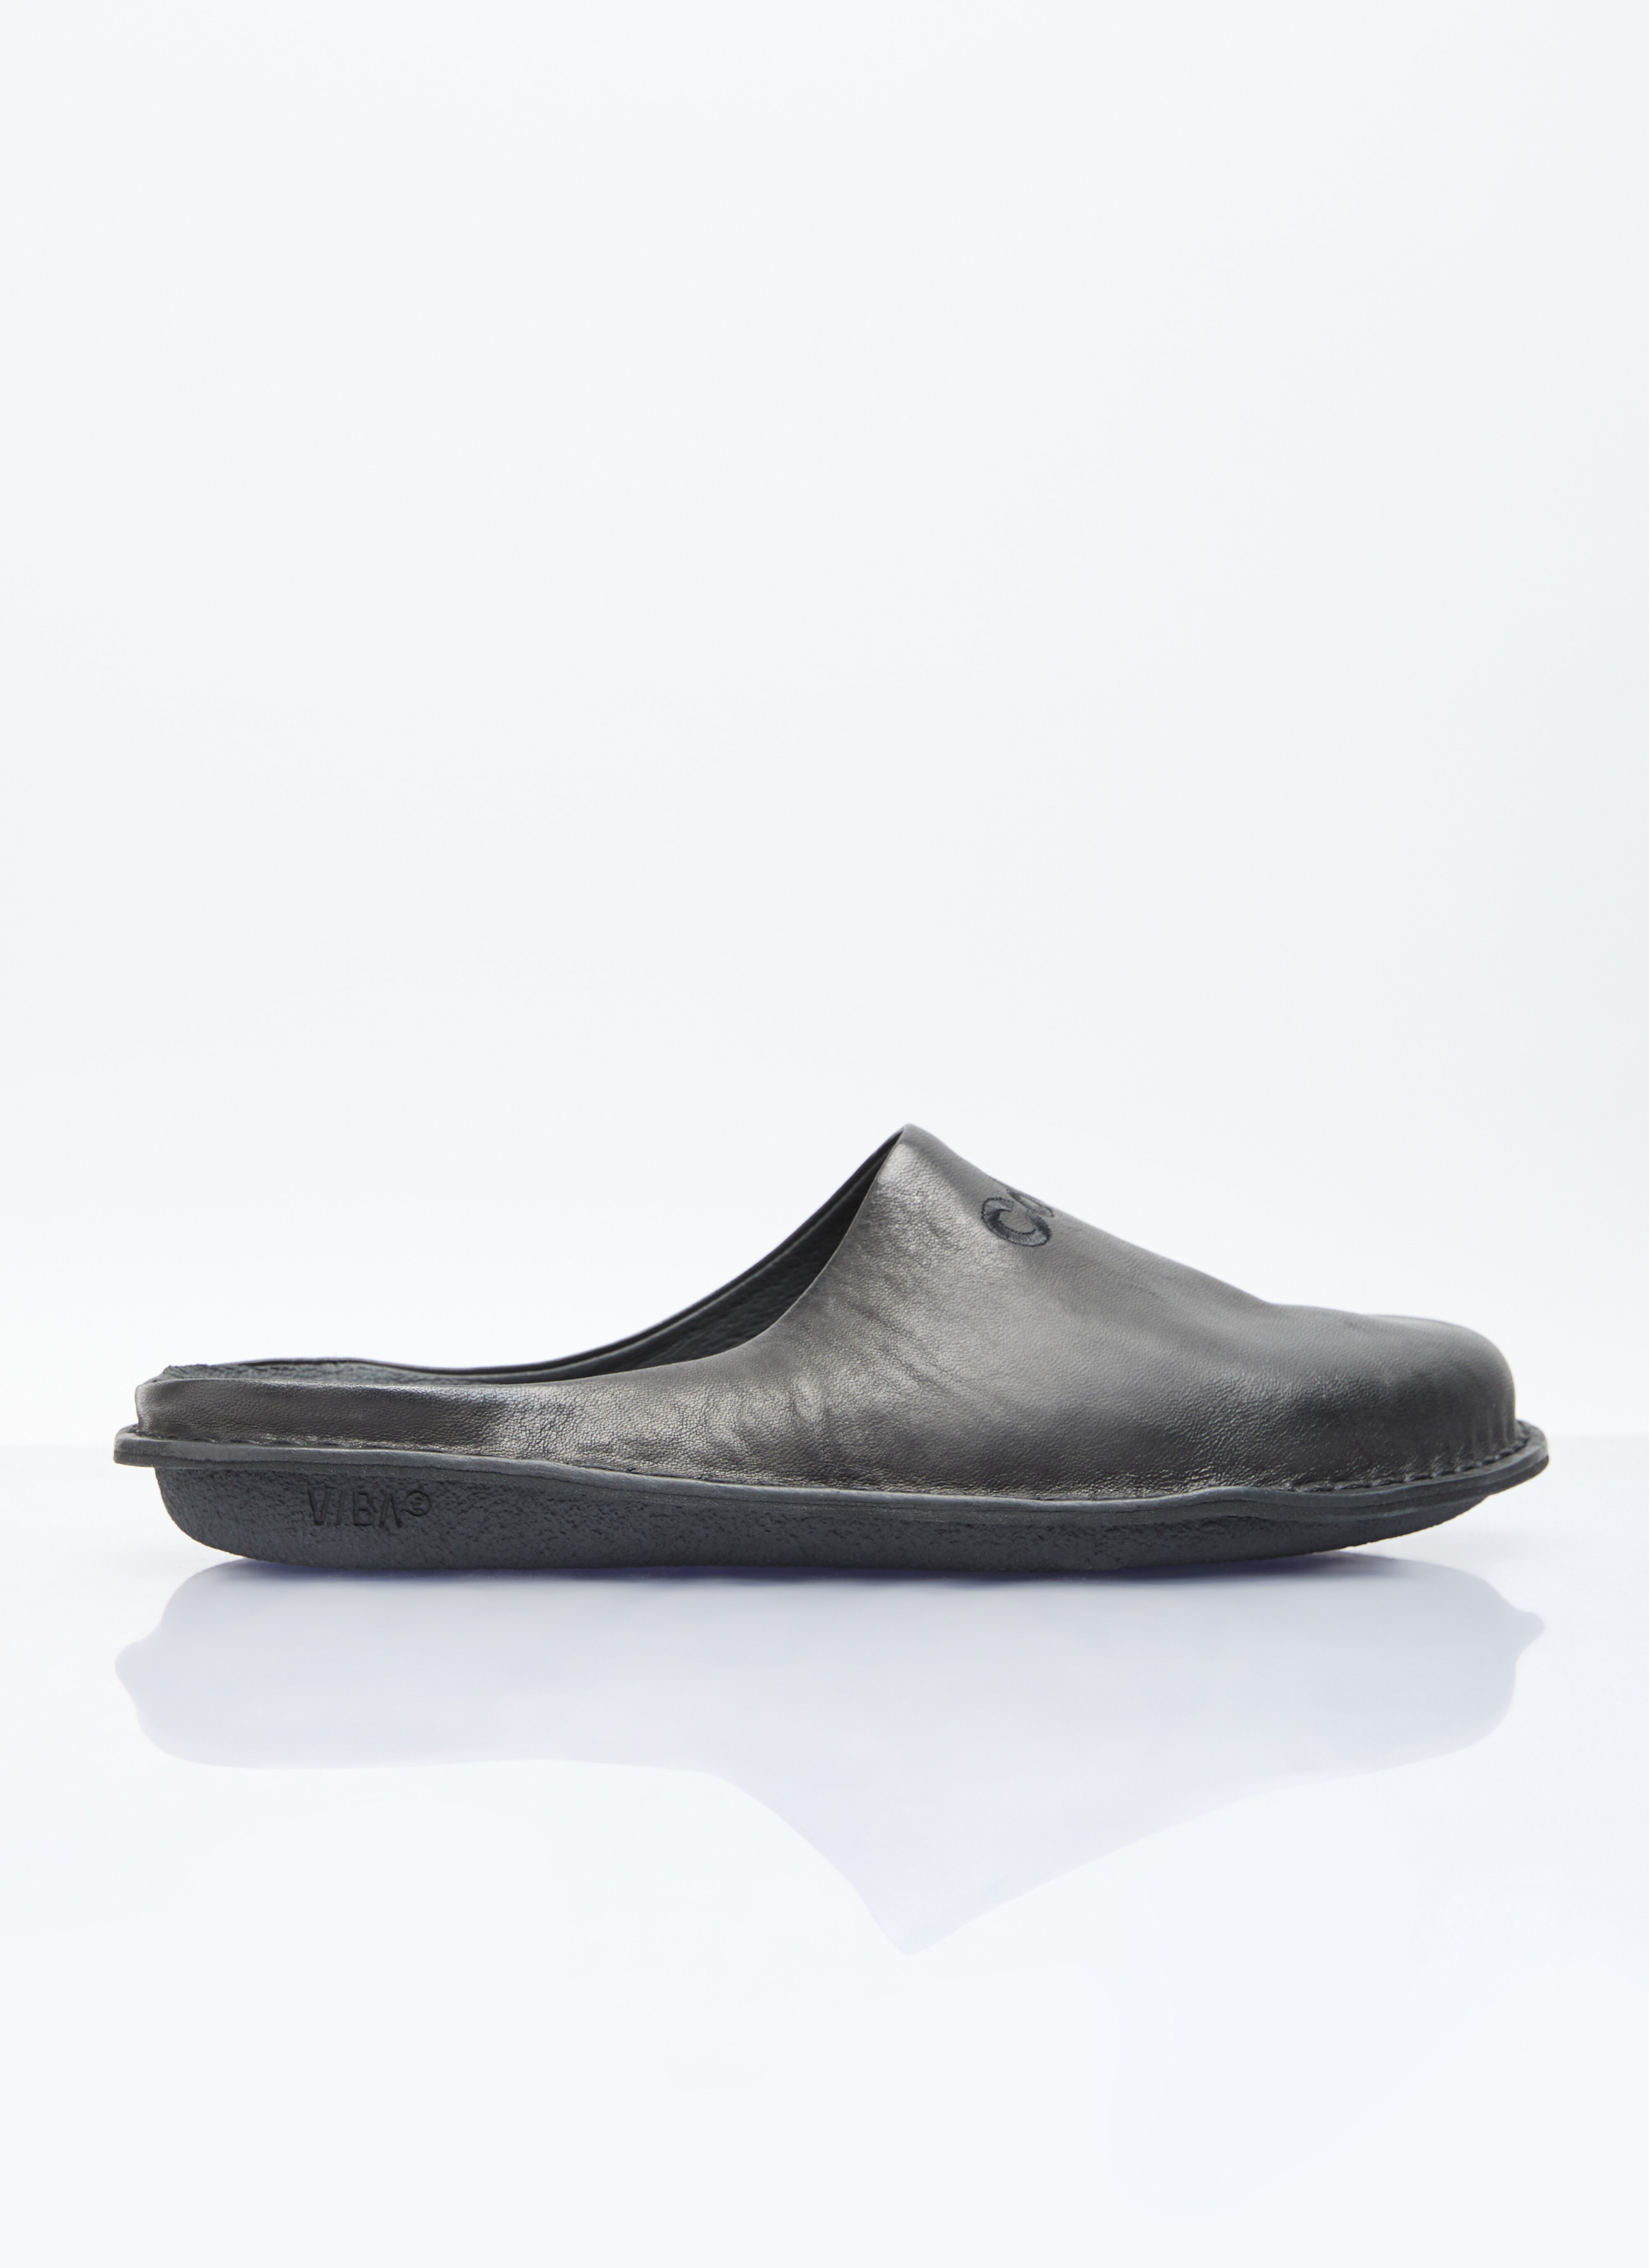 Comme des Garçons Homme x New Balance Leather Slip-On Shoes Black cgn0156001